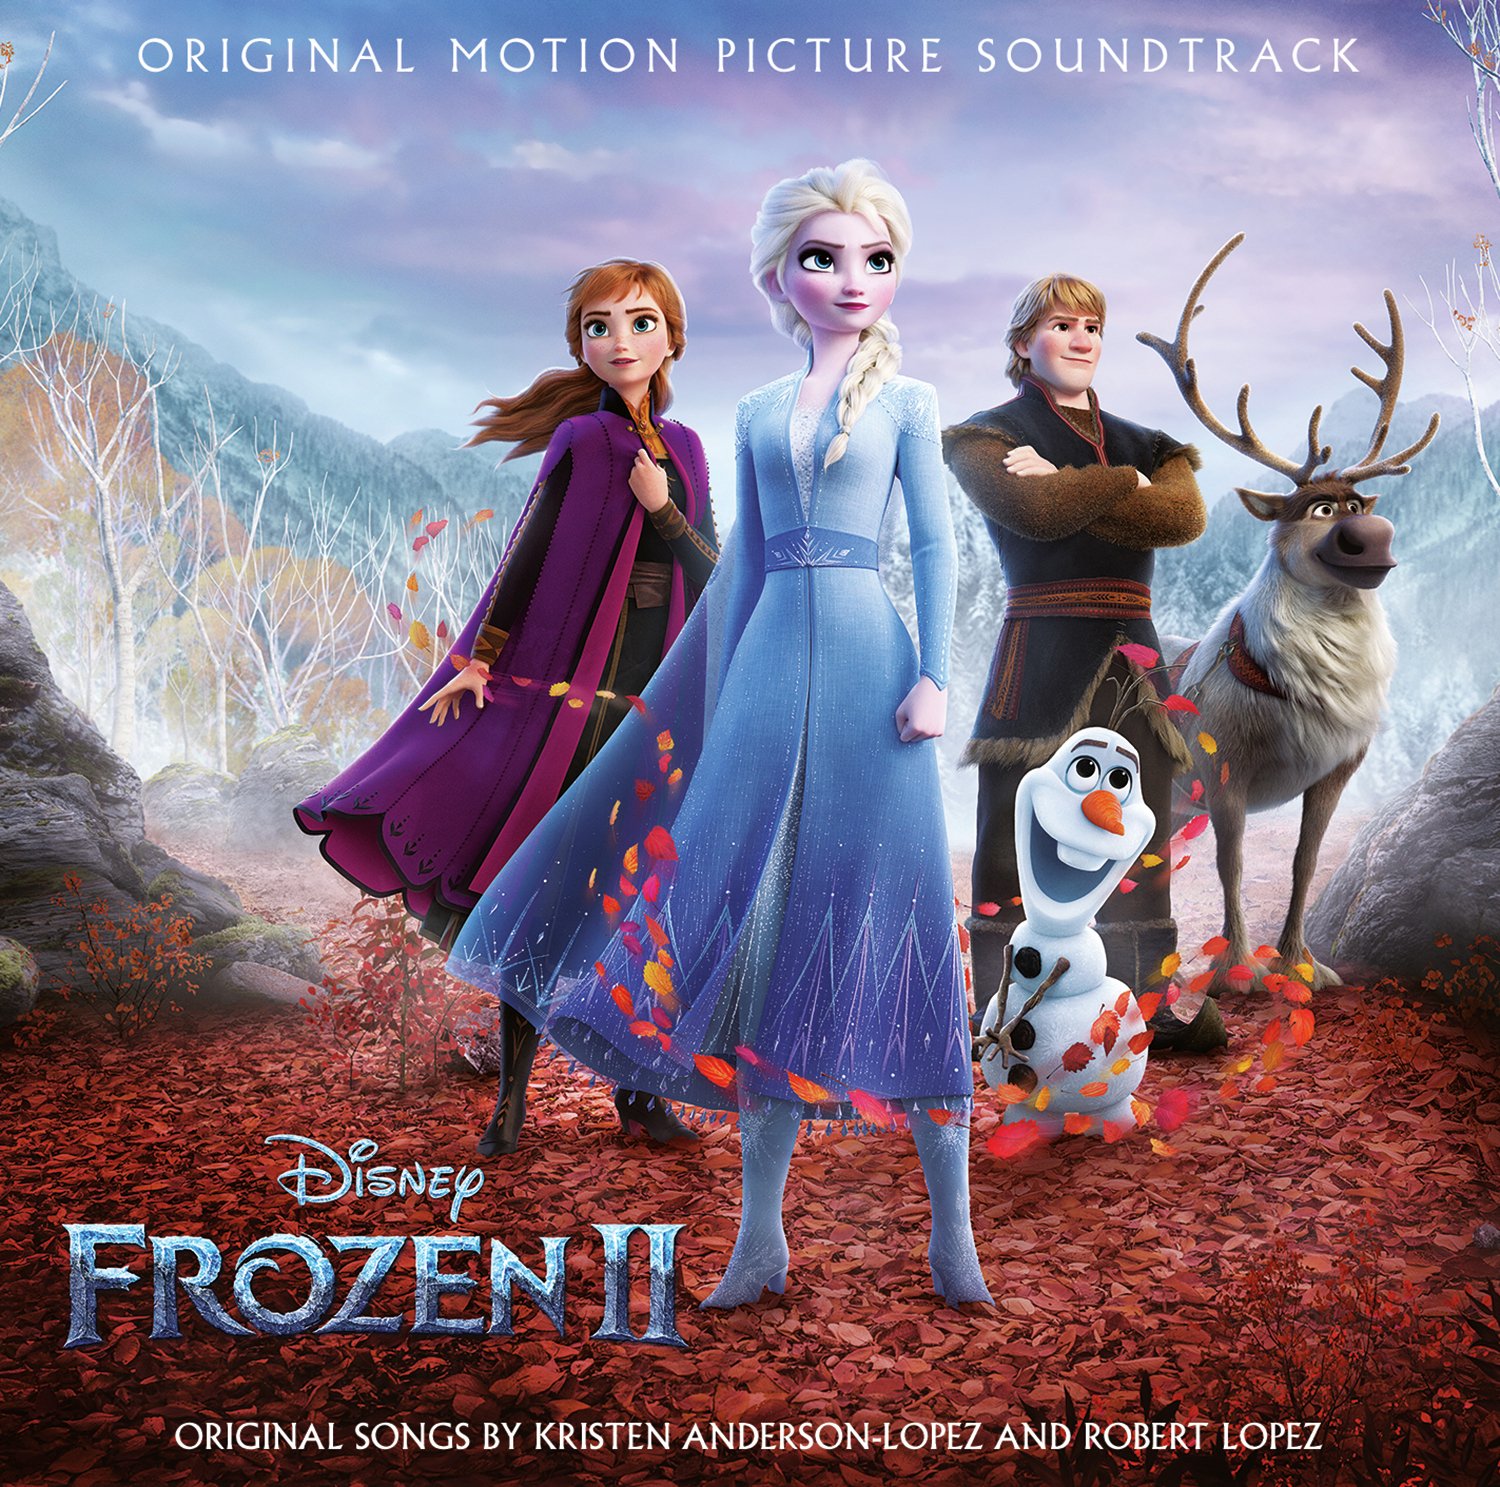 Frozen 2 Original Sound Track CD Review